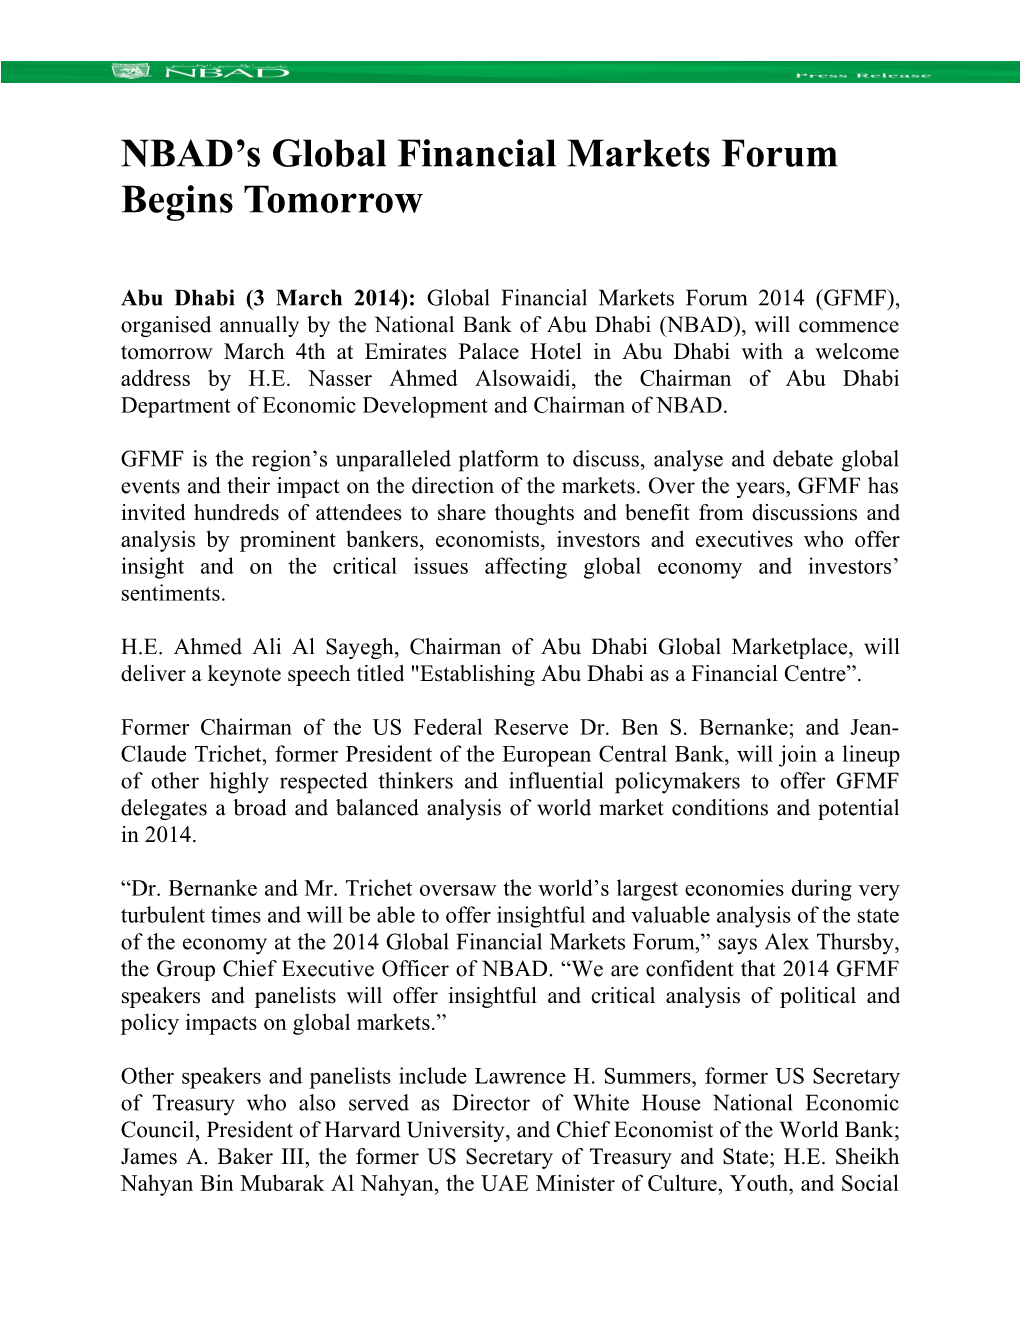 NBAD S Global Financial Markets Forum Begins Tomorrow